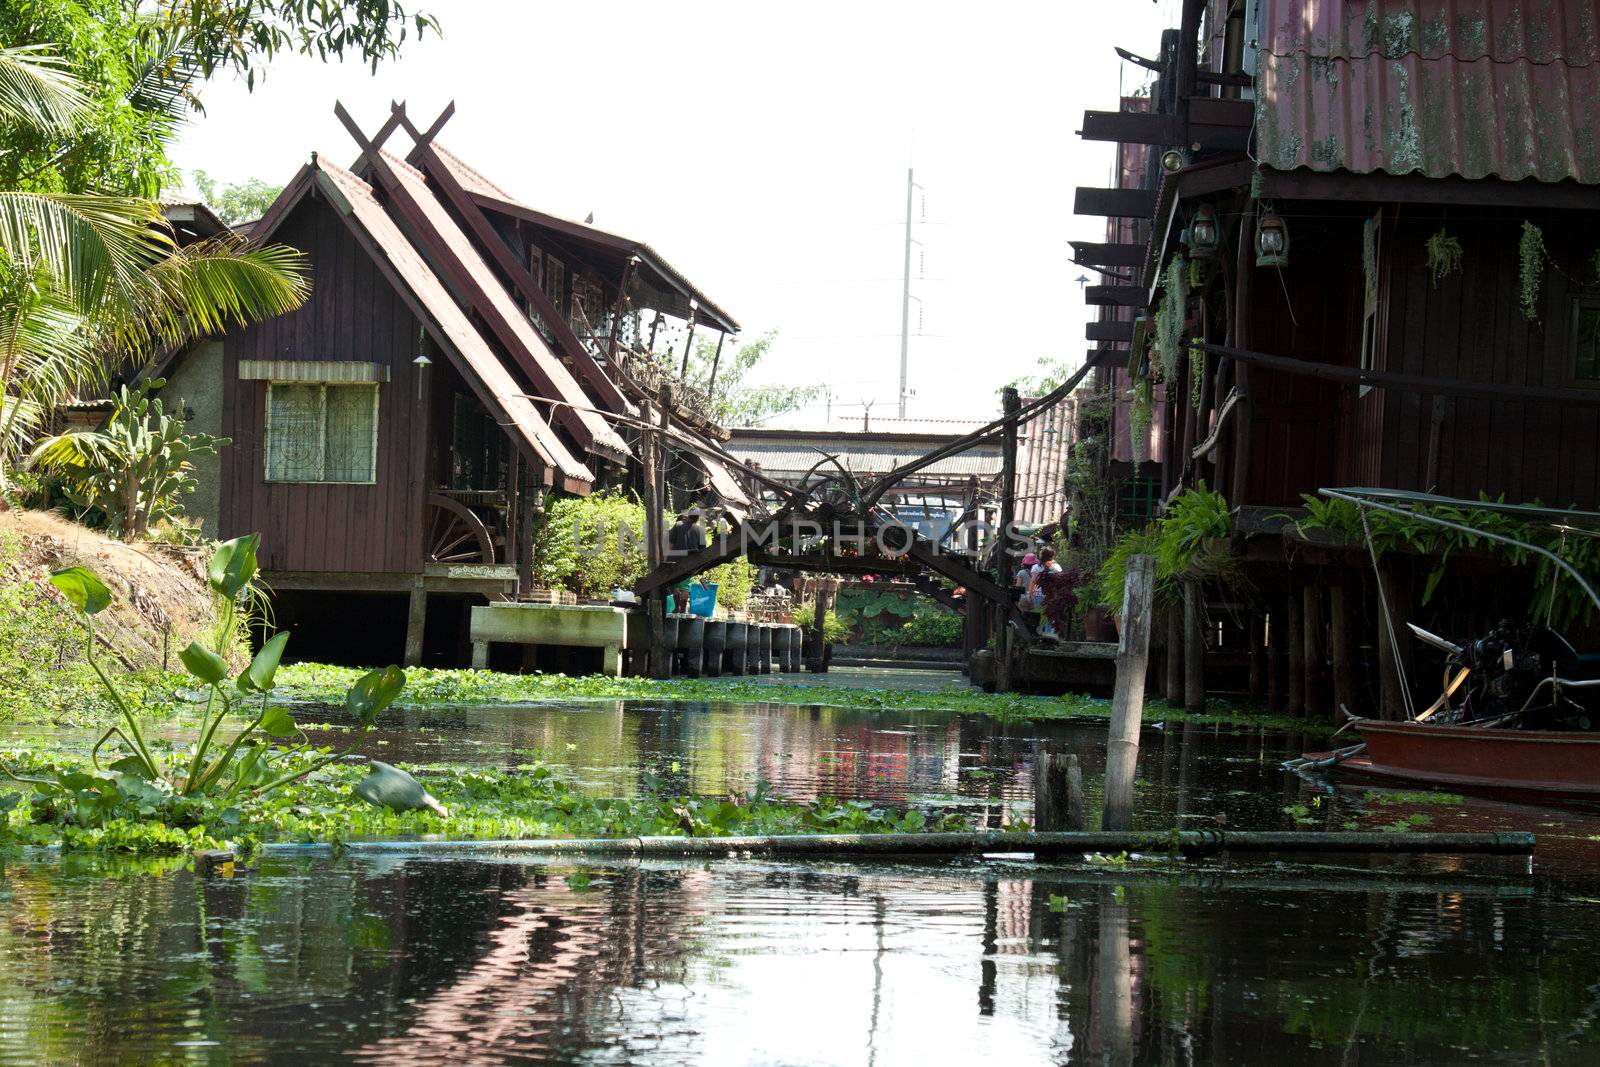 klongufer in bangkok by aidasonne